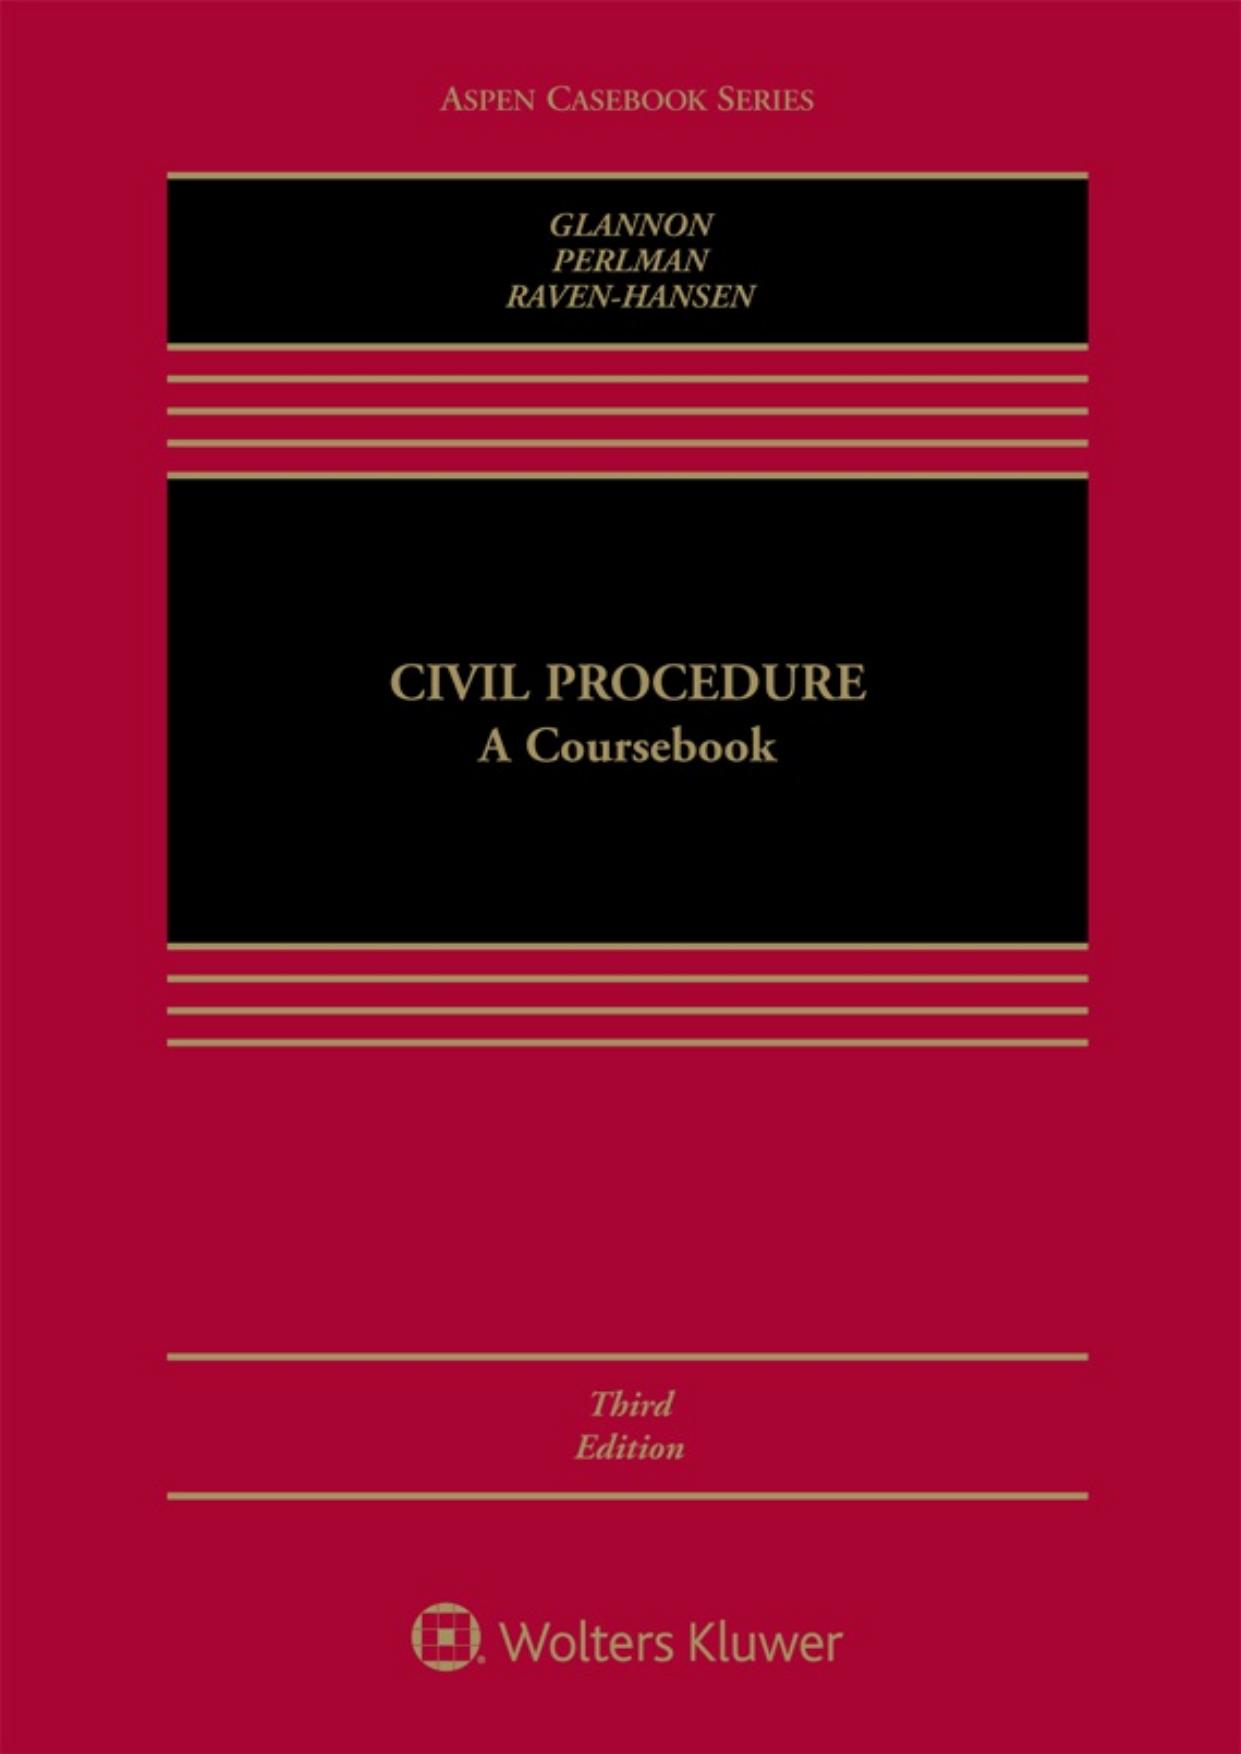 Civil Procedure_ A Coursebook (Aspen Casebook Series) - Joseph W. Glannon & Andrew M. Perlman & Peter Raven-Hansen.jpg